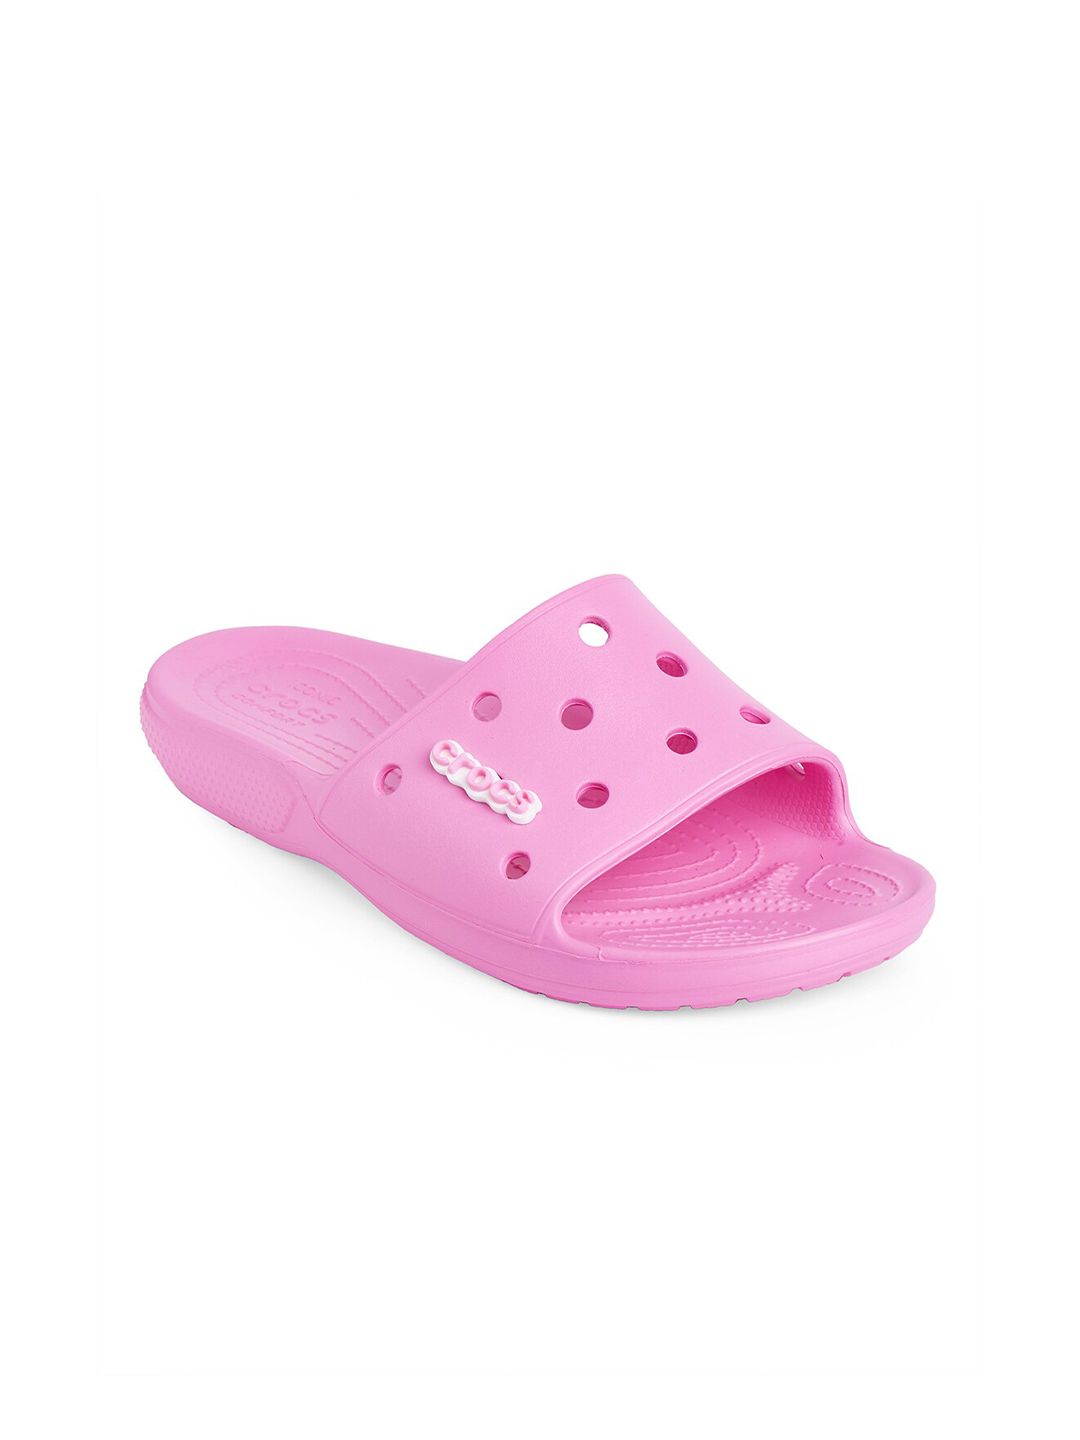 Crocs Pink Croslite Sliders Price in India